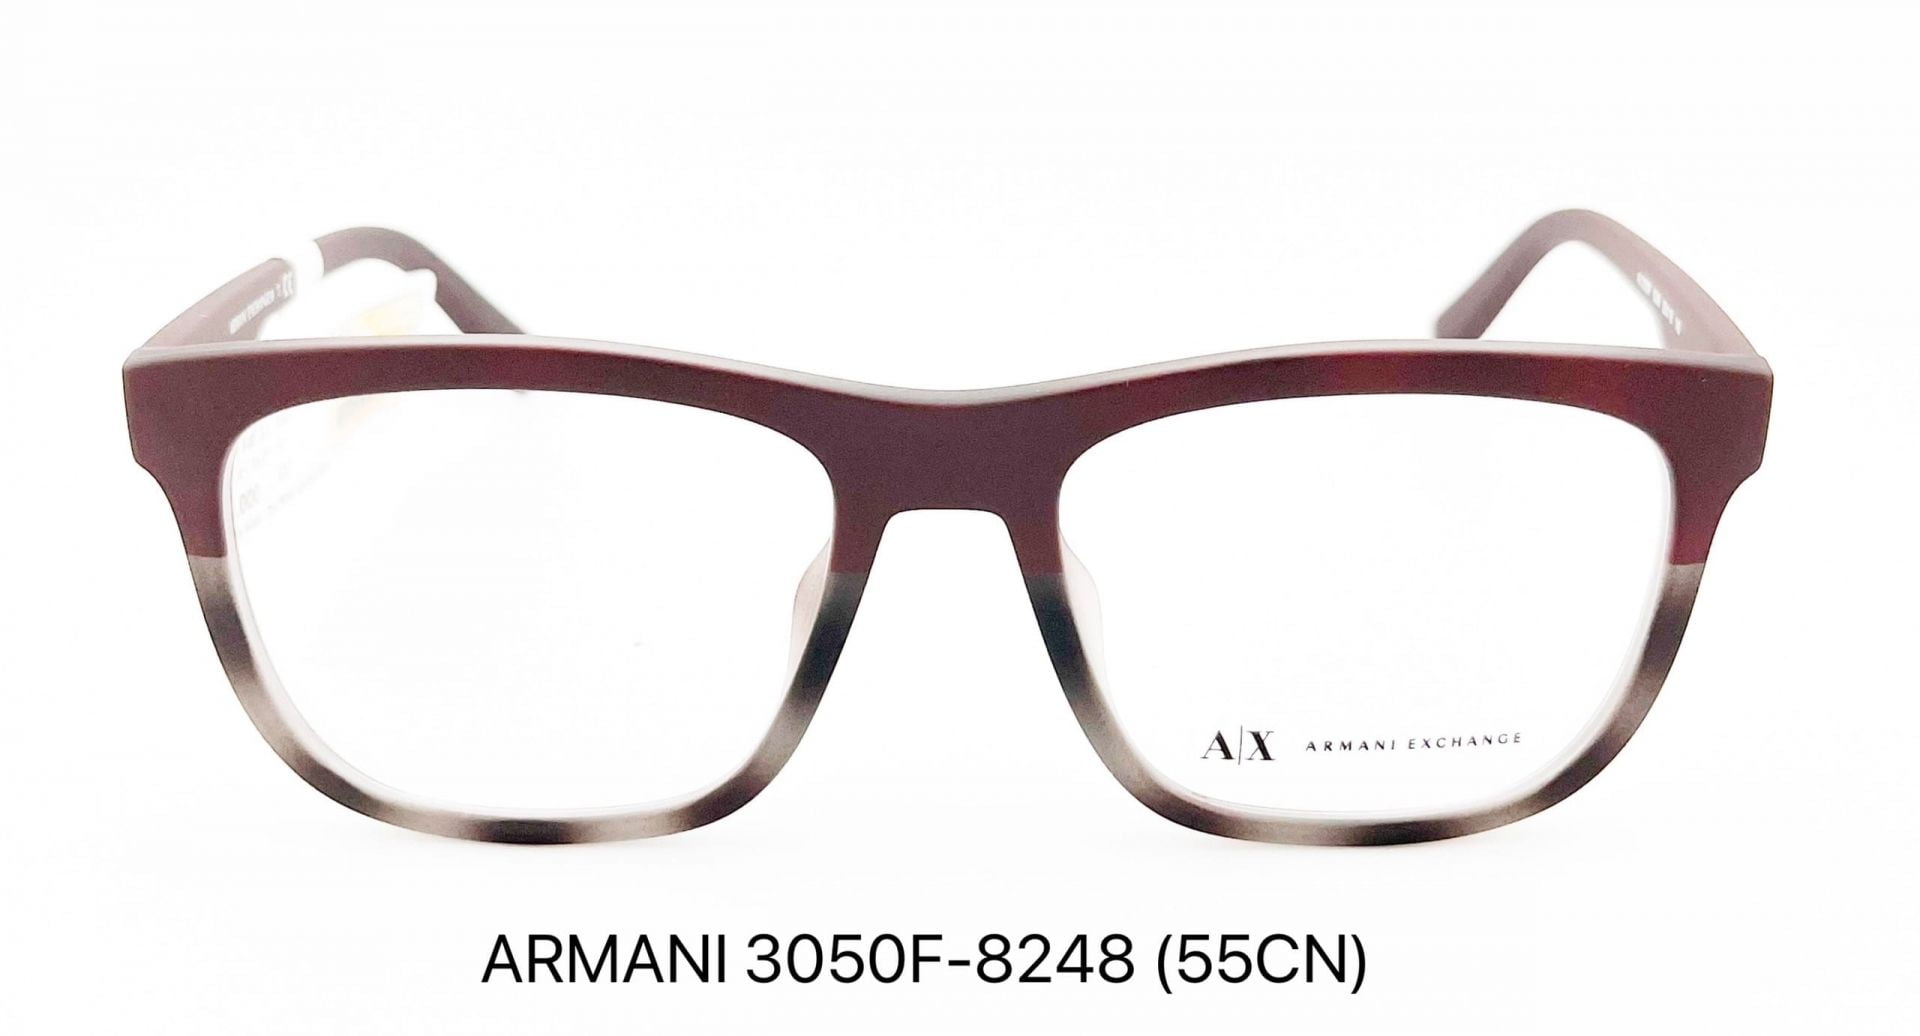 Gọng kính ARMANI EXCHANGE 3050F-8248 (55CN)